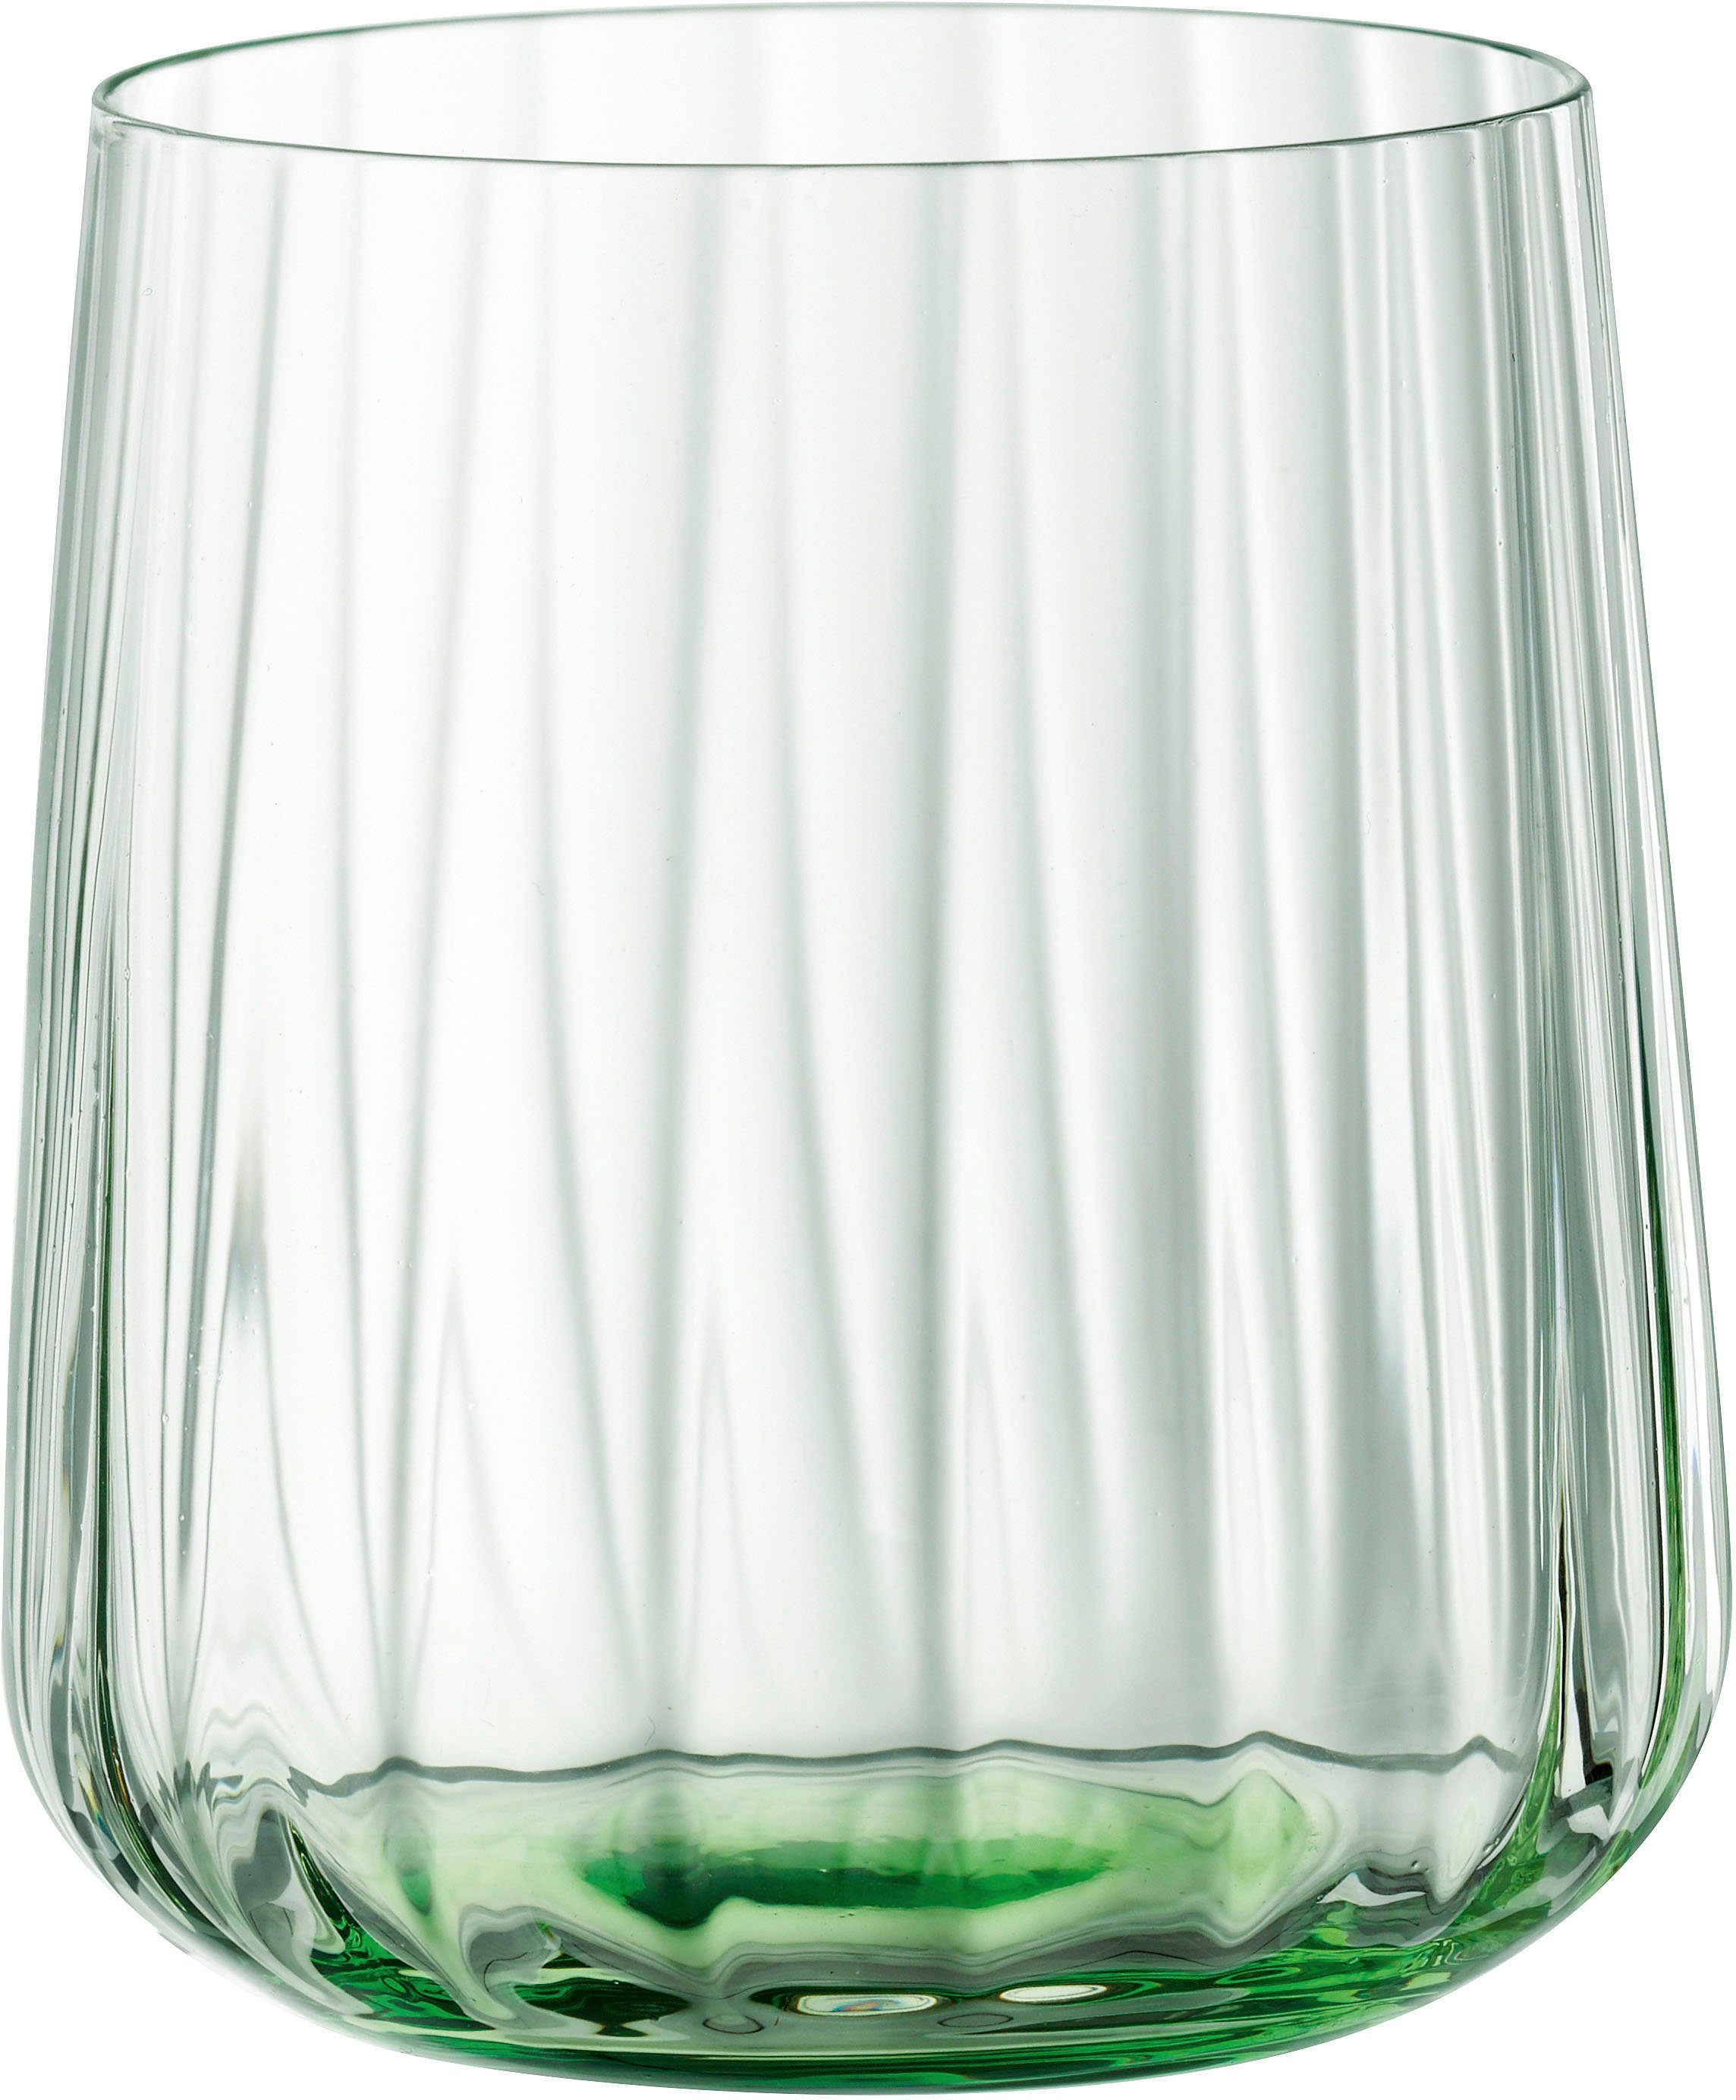 Becher Kristallglas, leaf LifeStyle, 340 2-teilig ml, SPIEGELAU